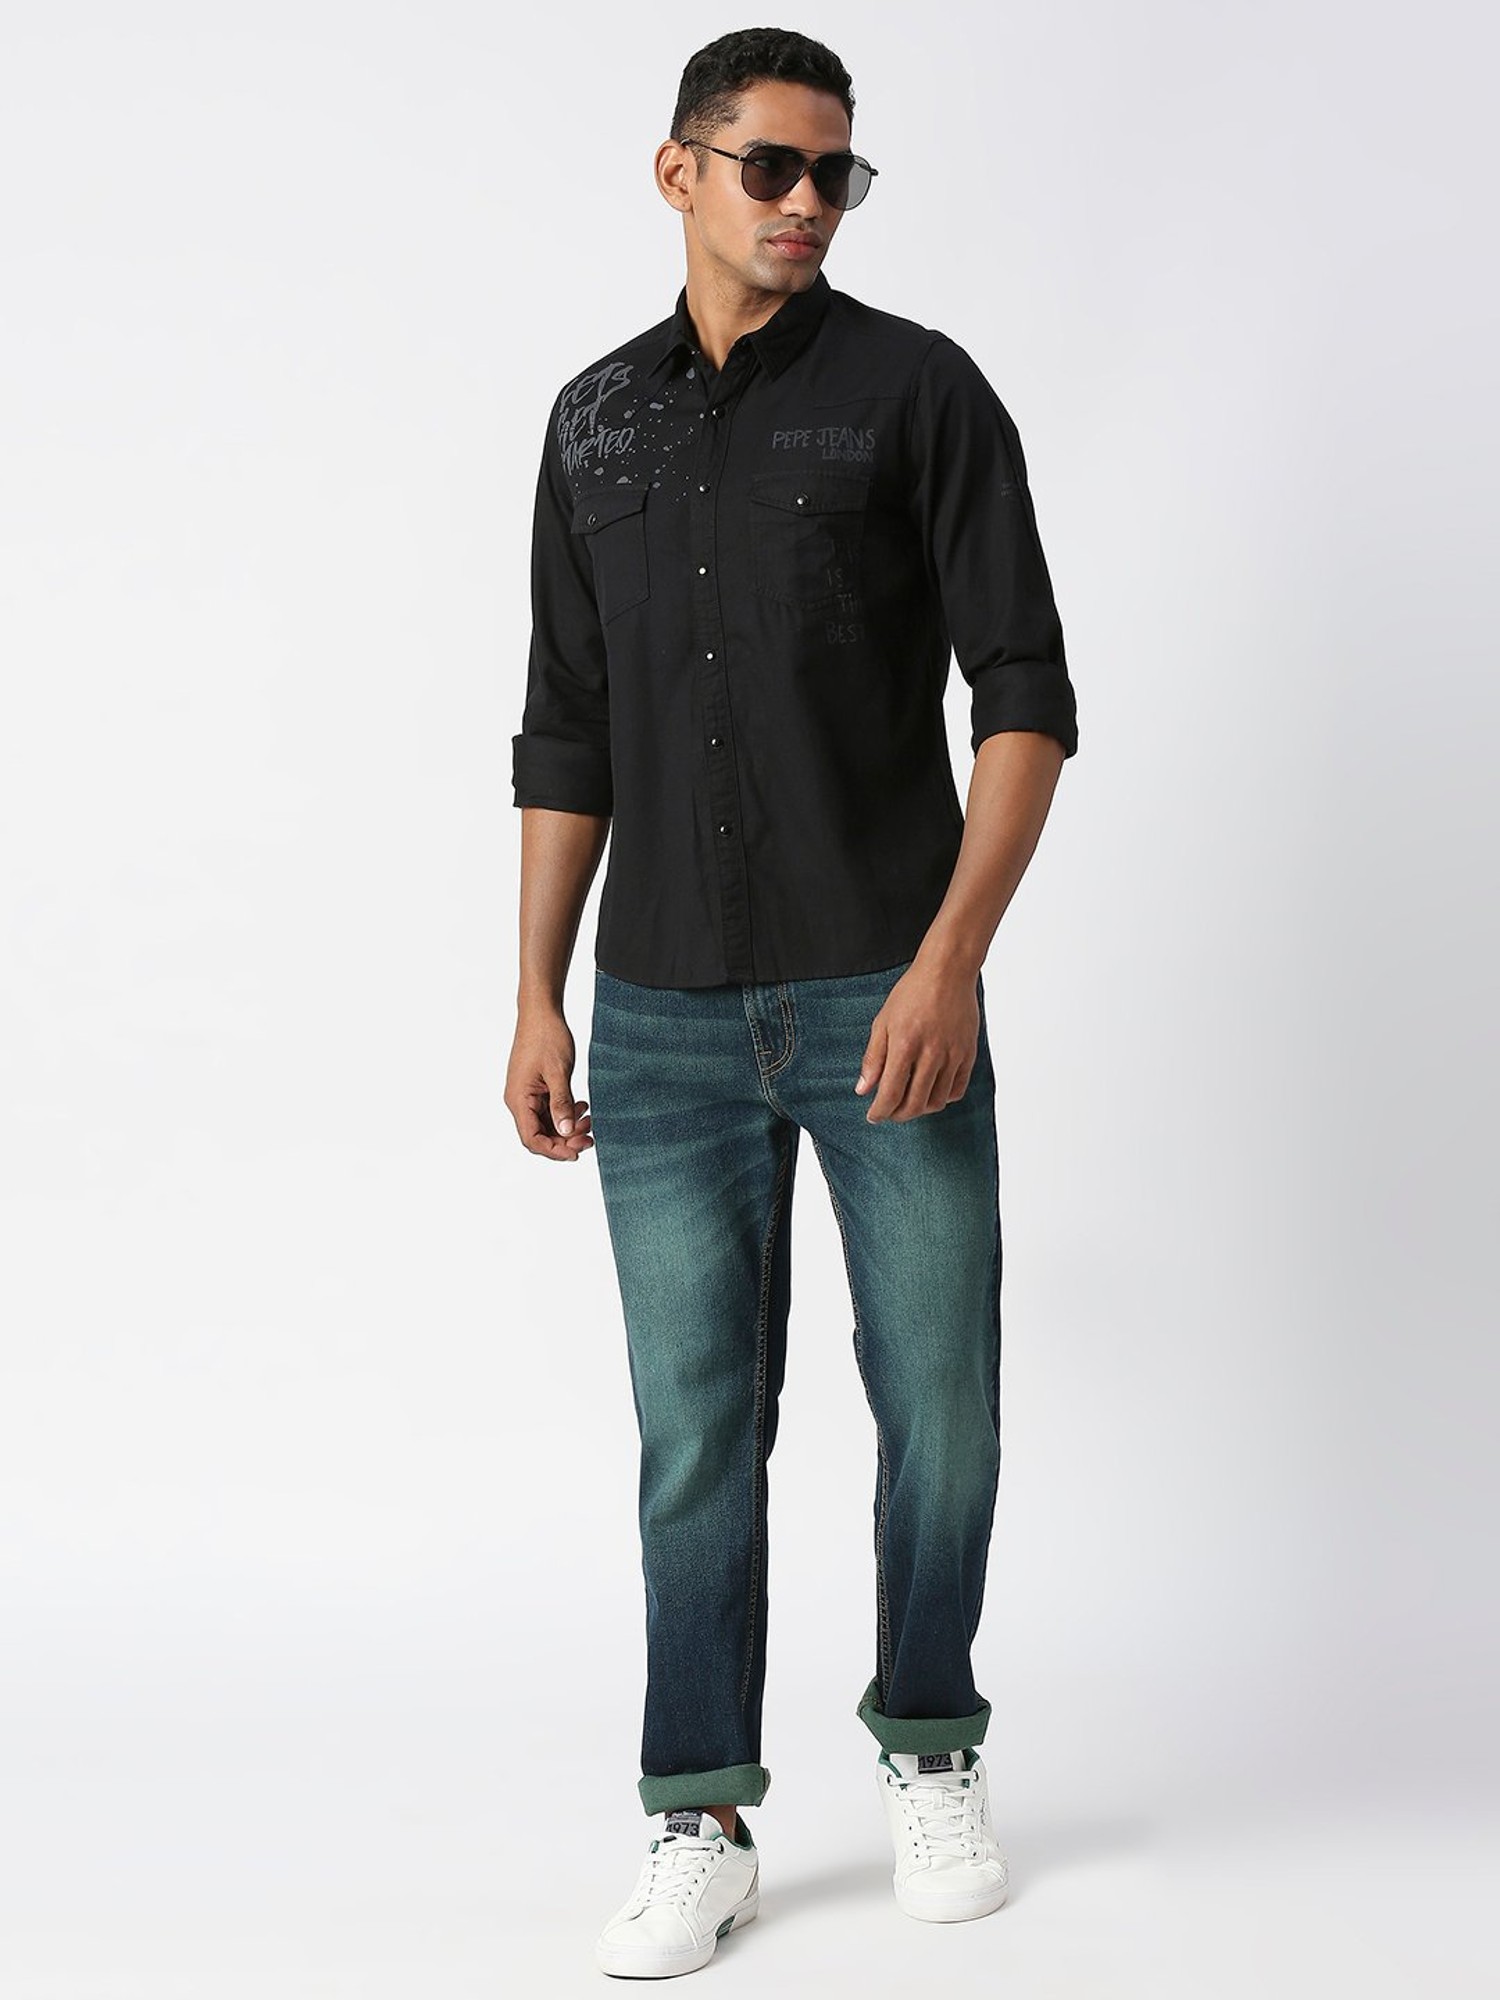 Buy Pepe Jeans Men's Slim T-Shirt (PM508423_Black S) at Amazon.in